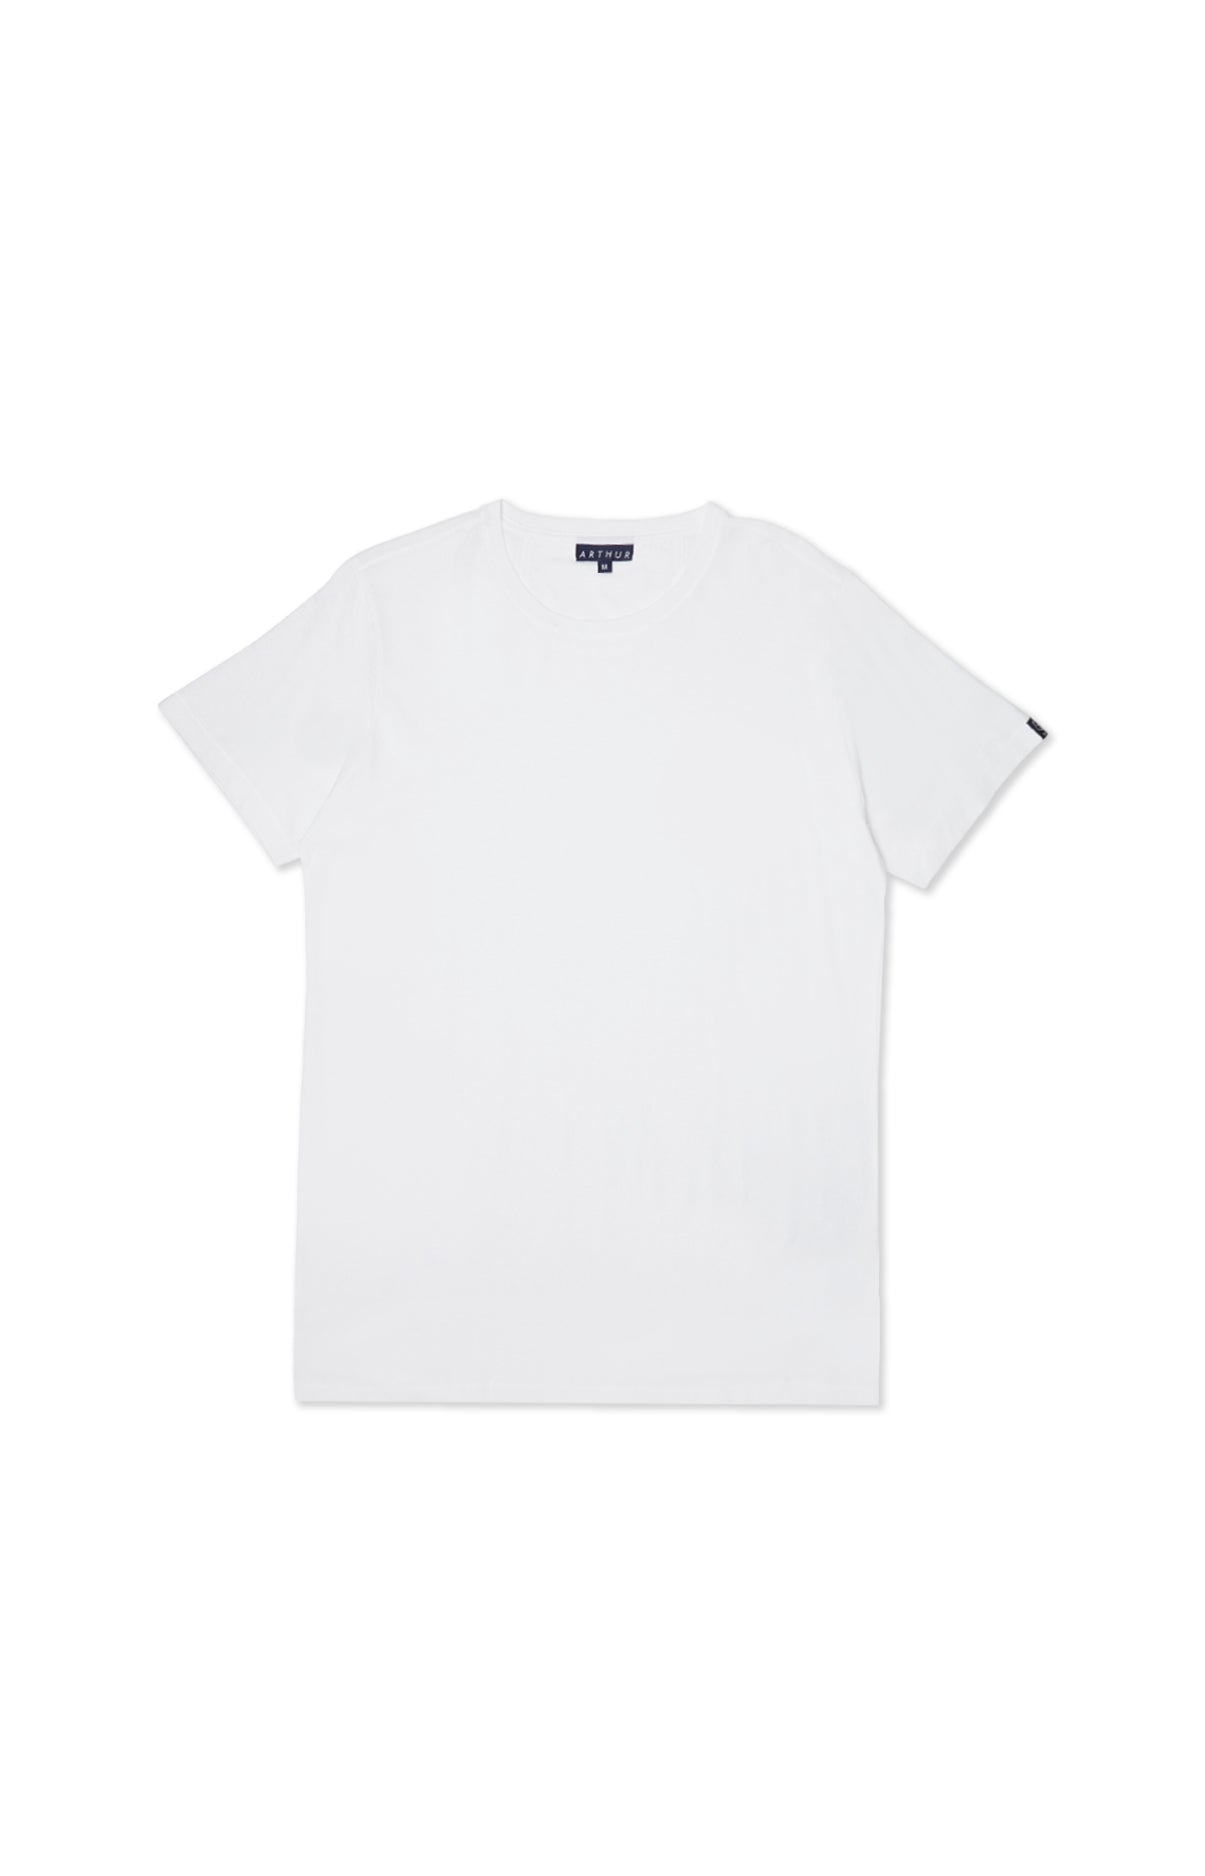 Tee shirt uni blanc 2